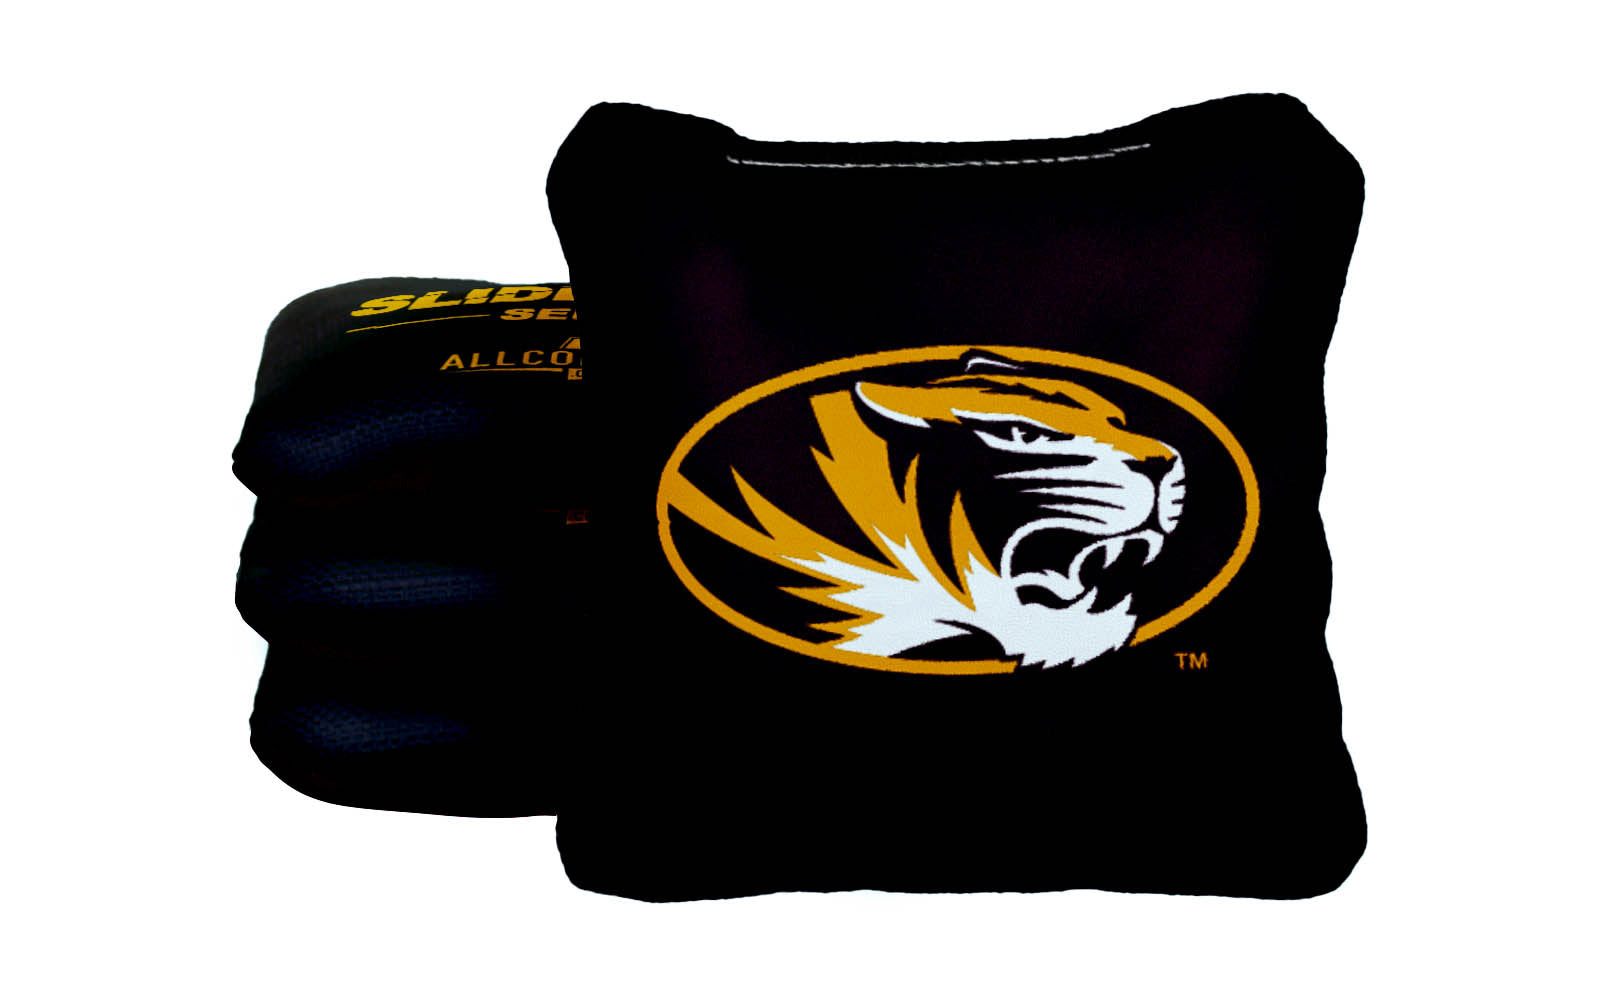 Officially Licensed Collegiate Cornhole Bags - Slide Rite - Set of 4 - University of Missouri